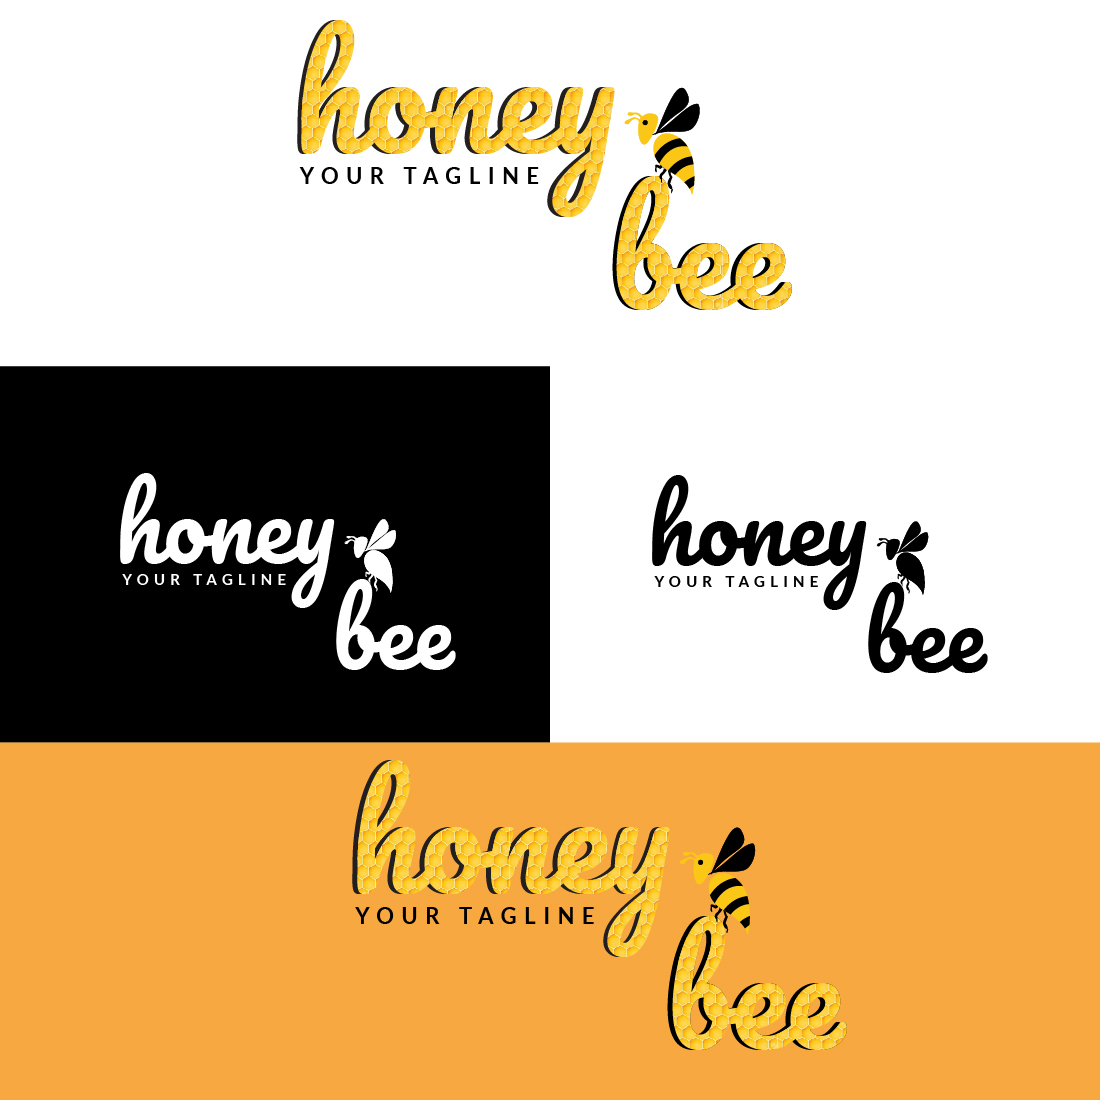 Honey Bee logo cover image.